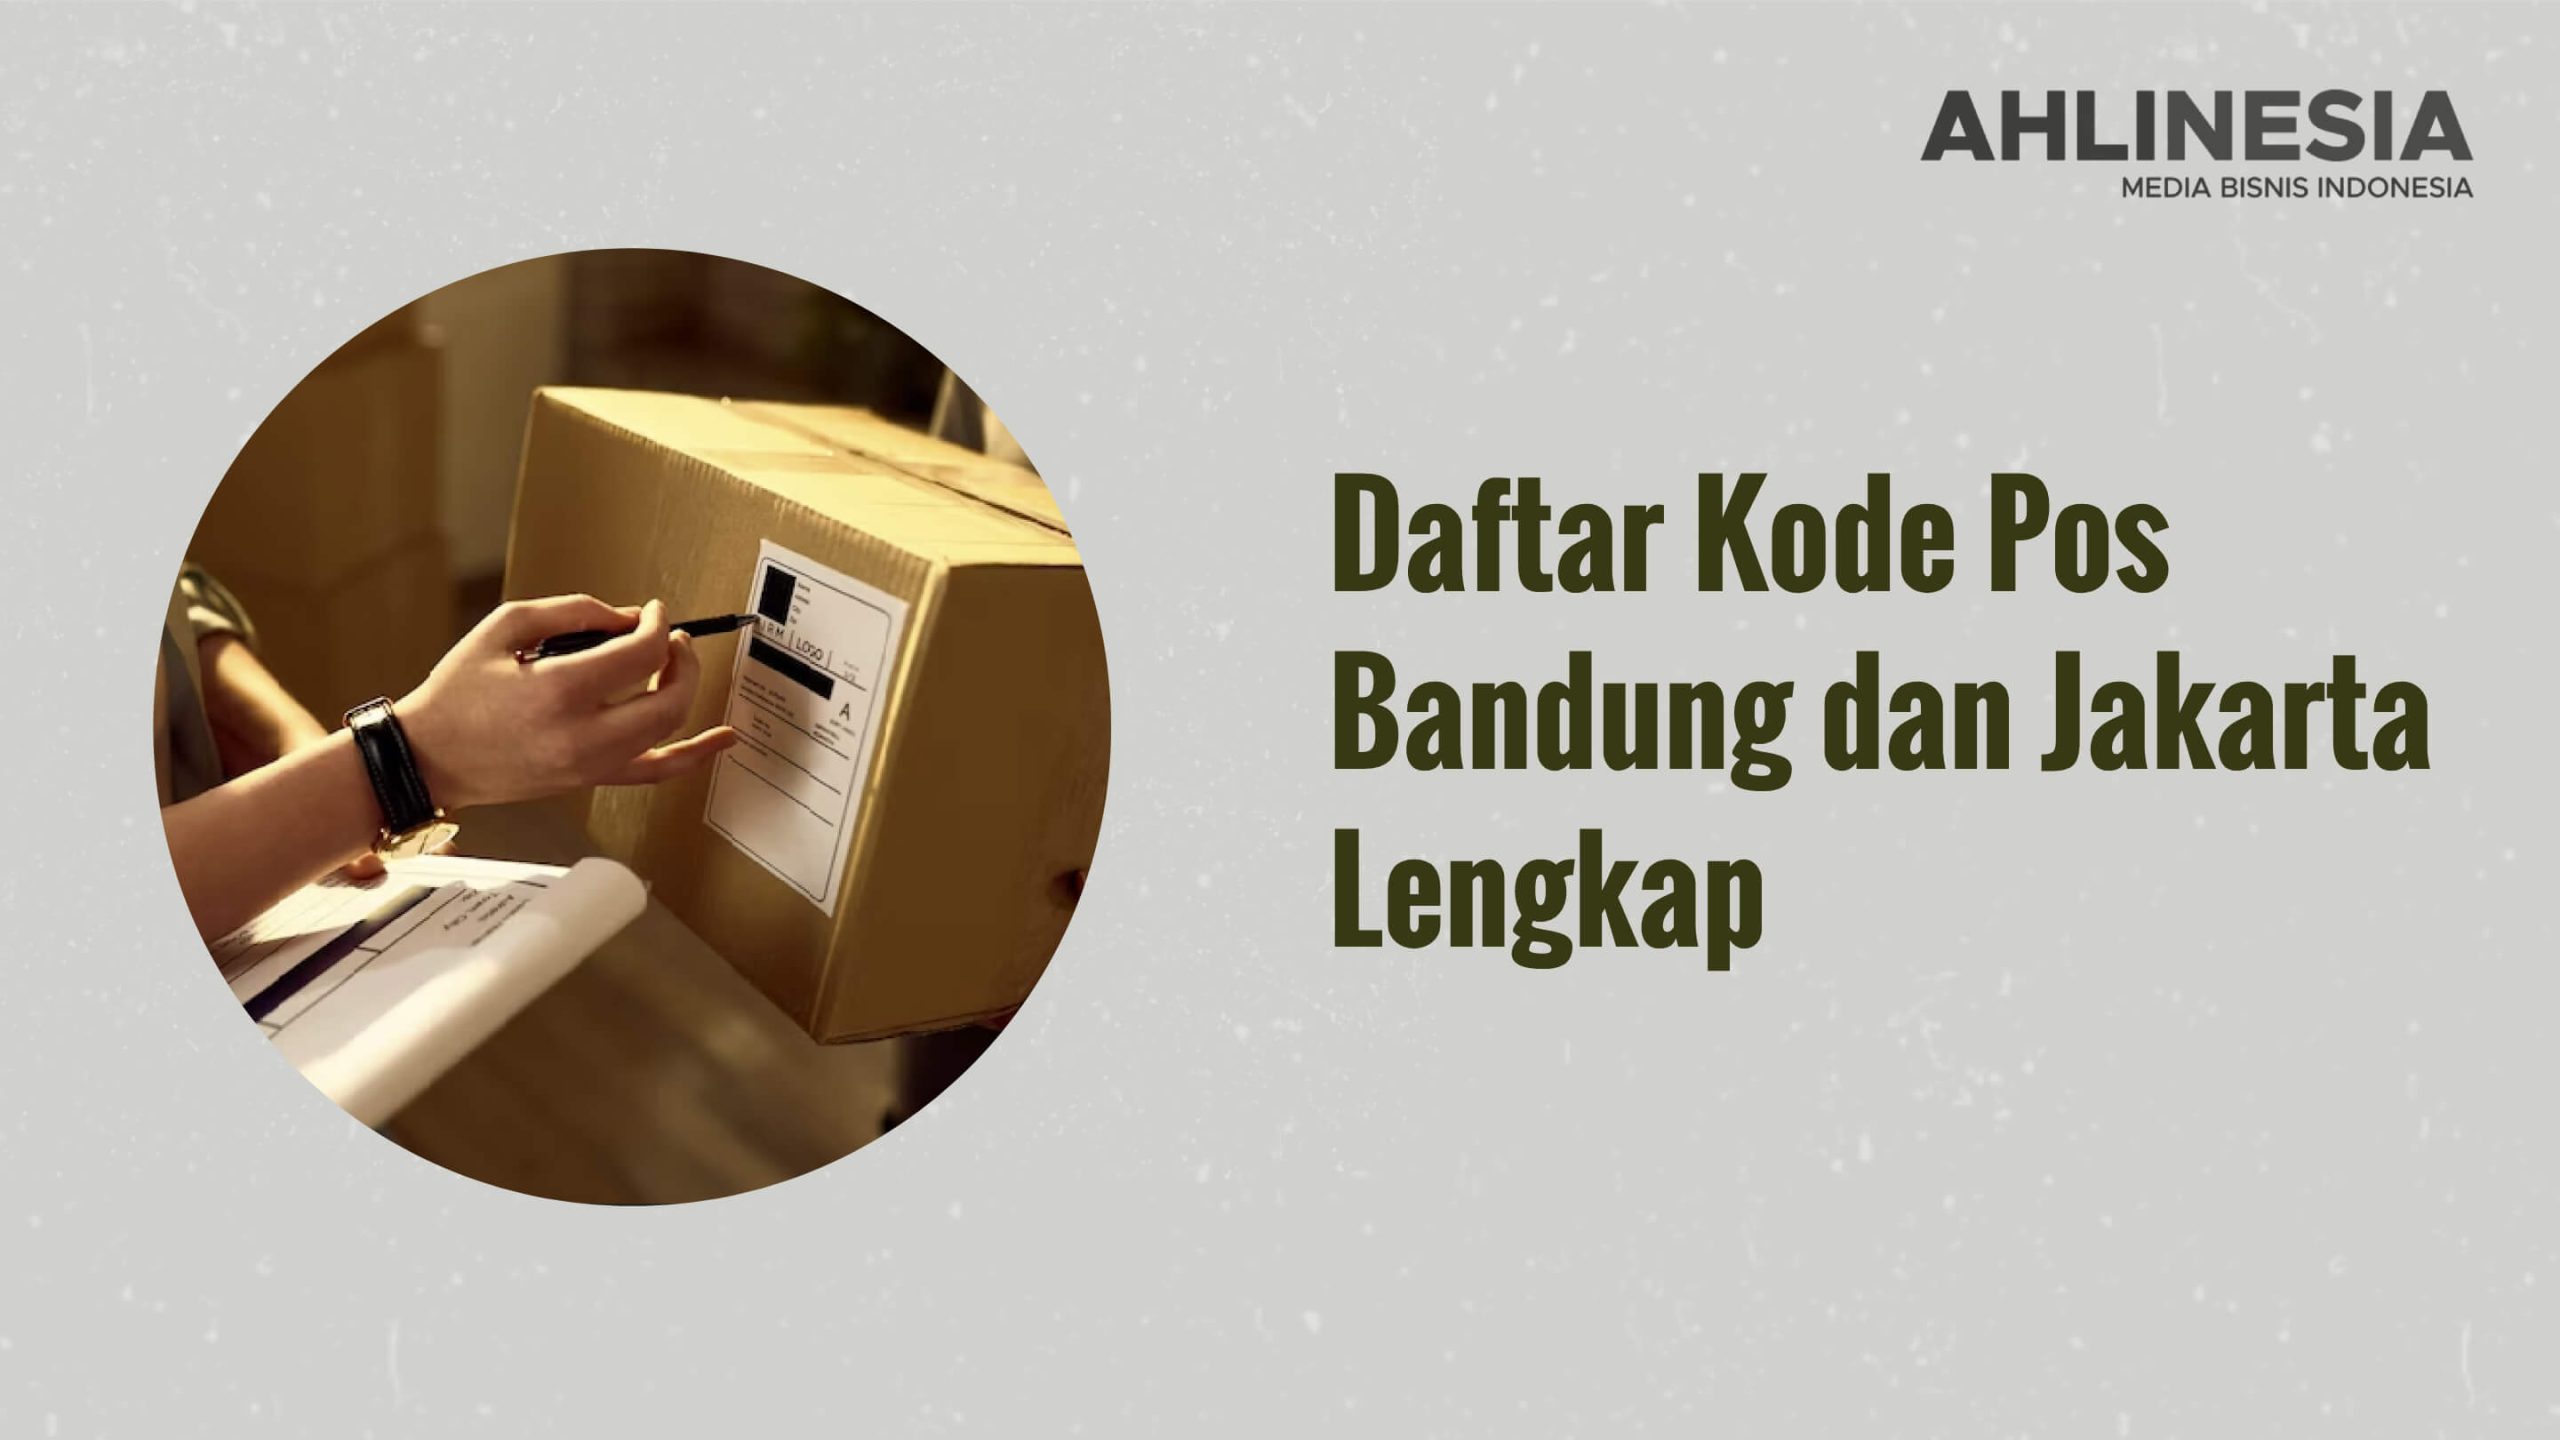 Daftar Kode Pos Bandung dan Jakarta